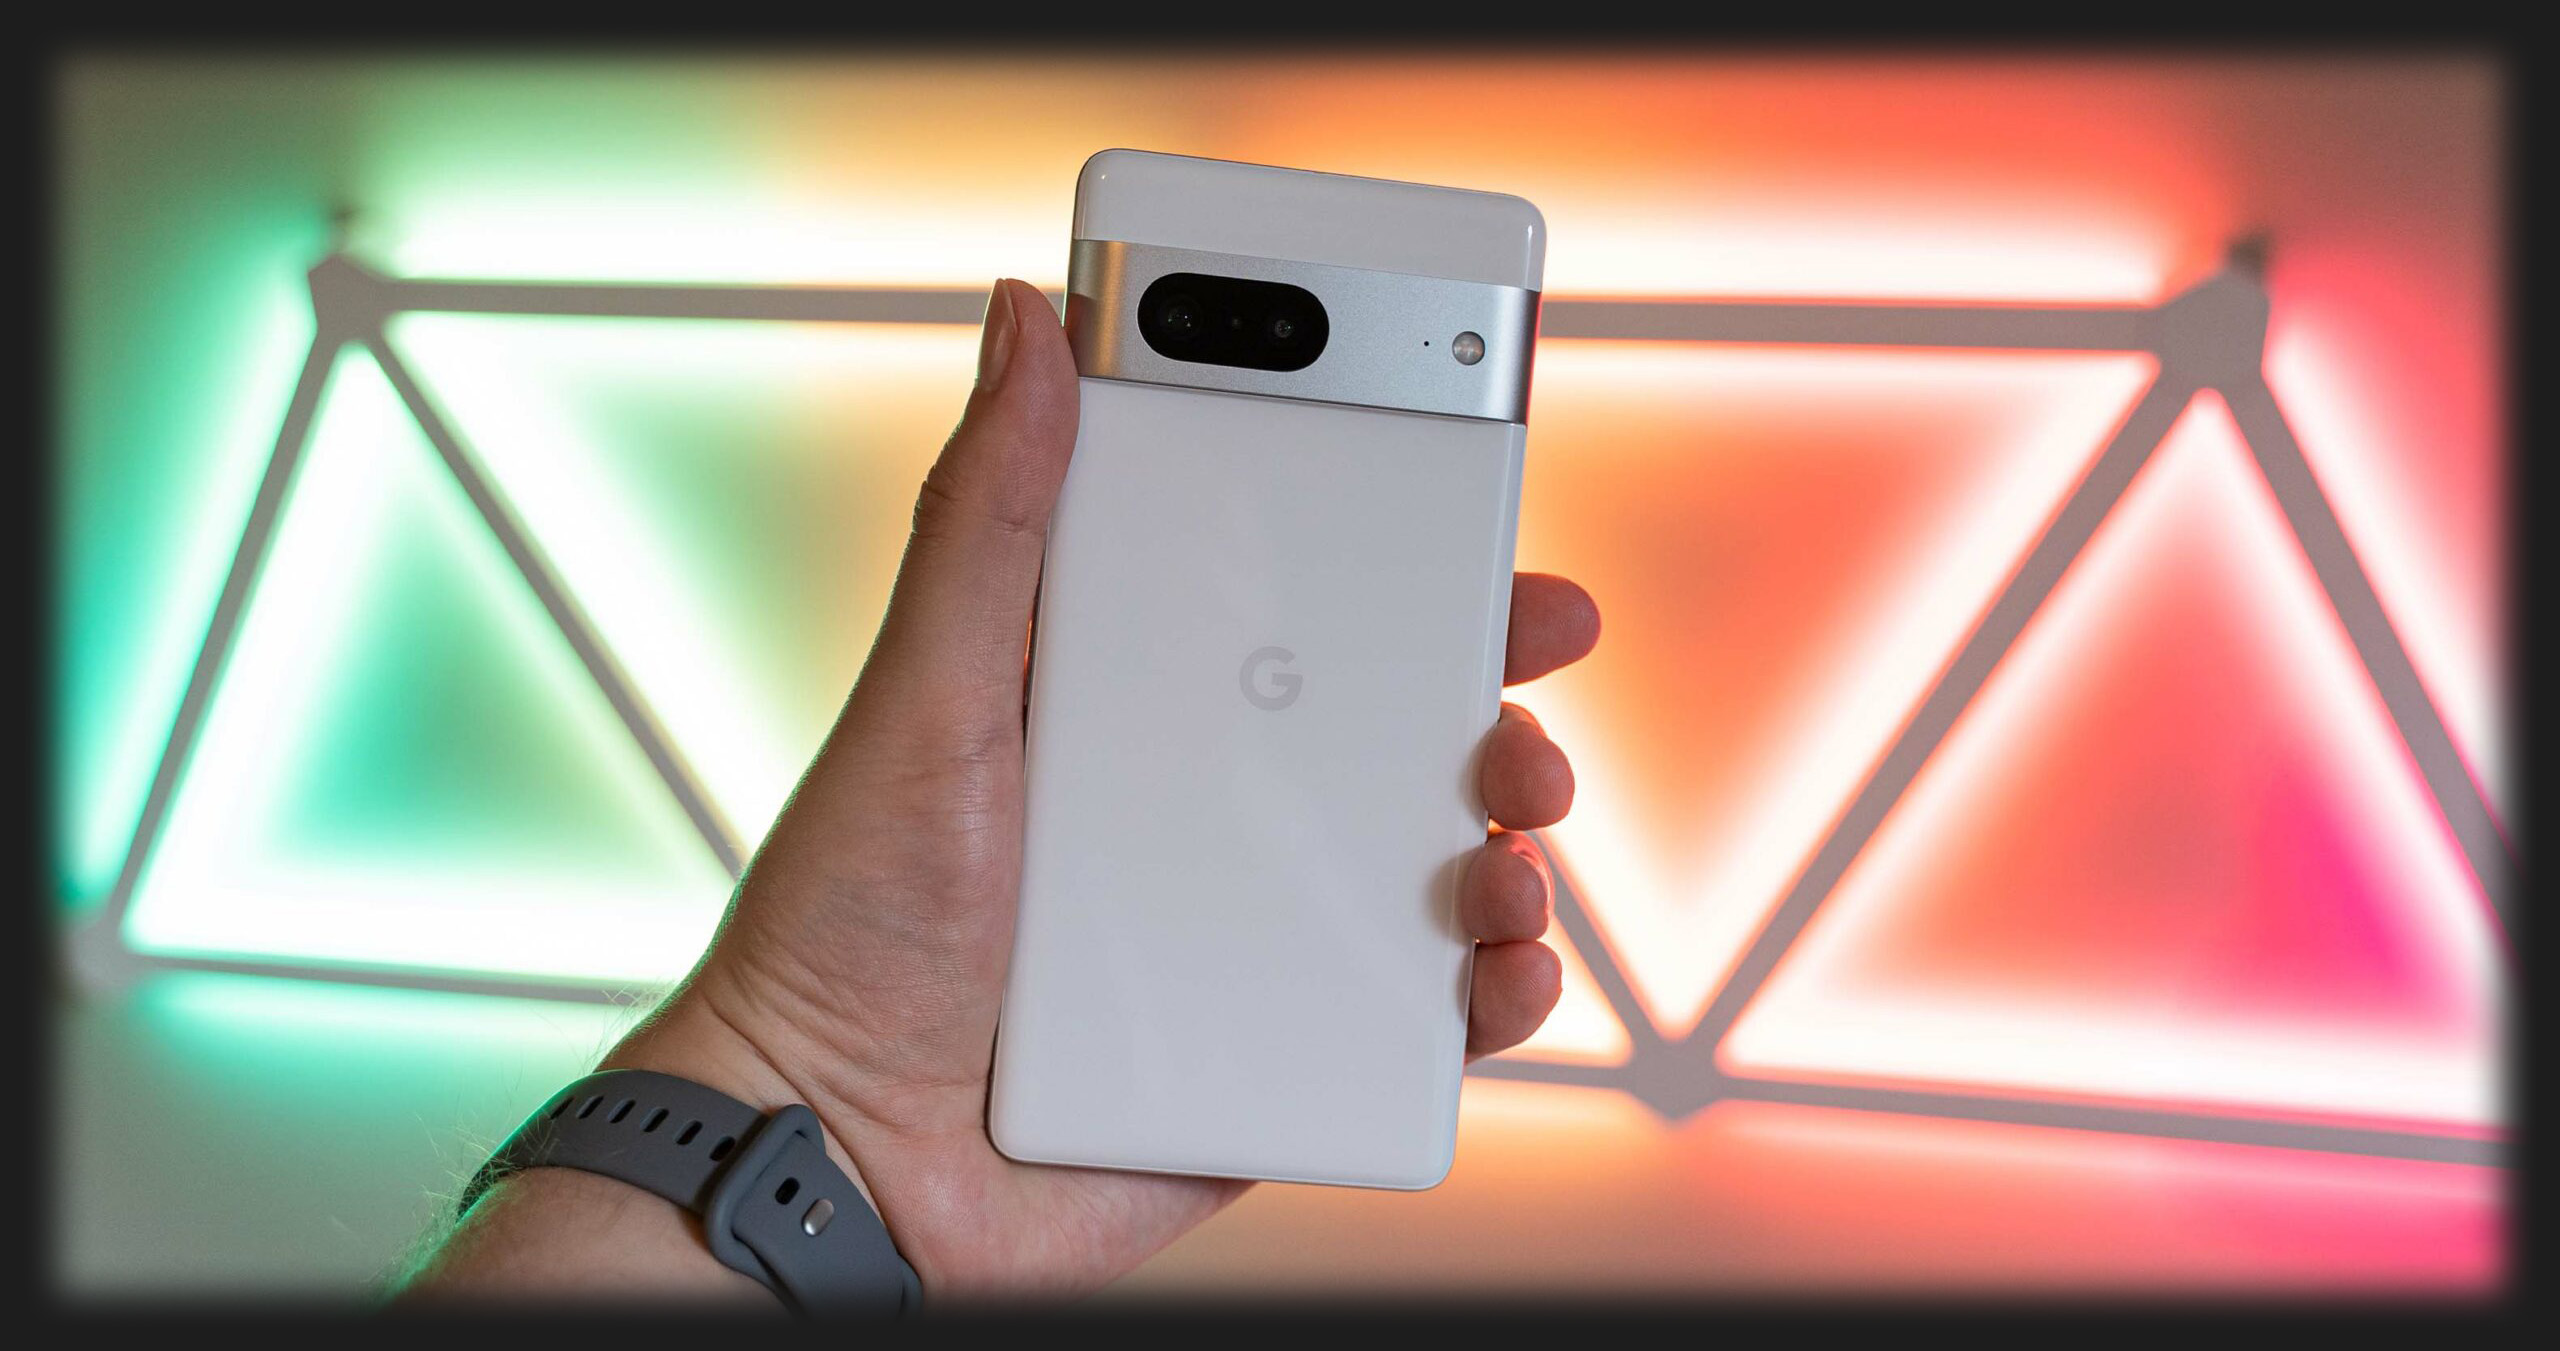 Смартфон Google Pixel 7 8/128GB (Lemongrass)